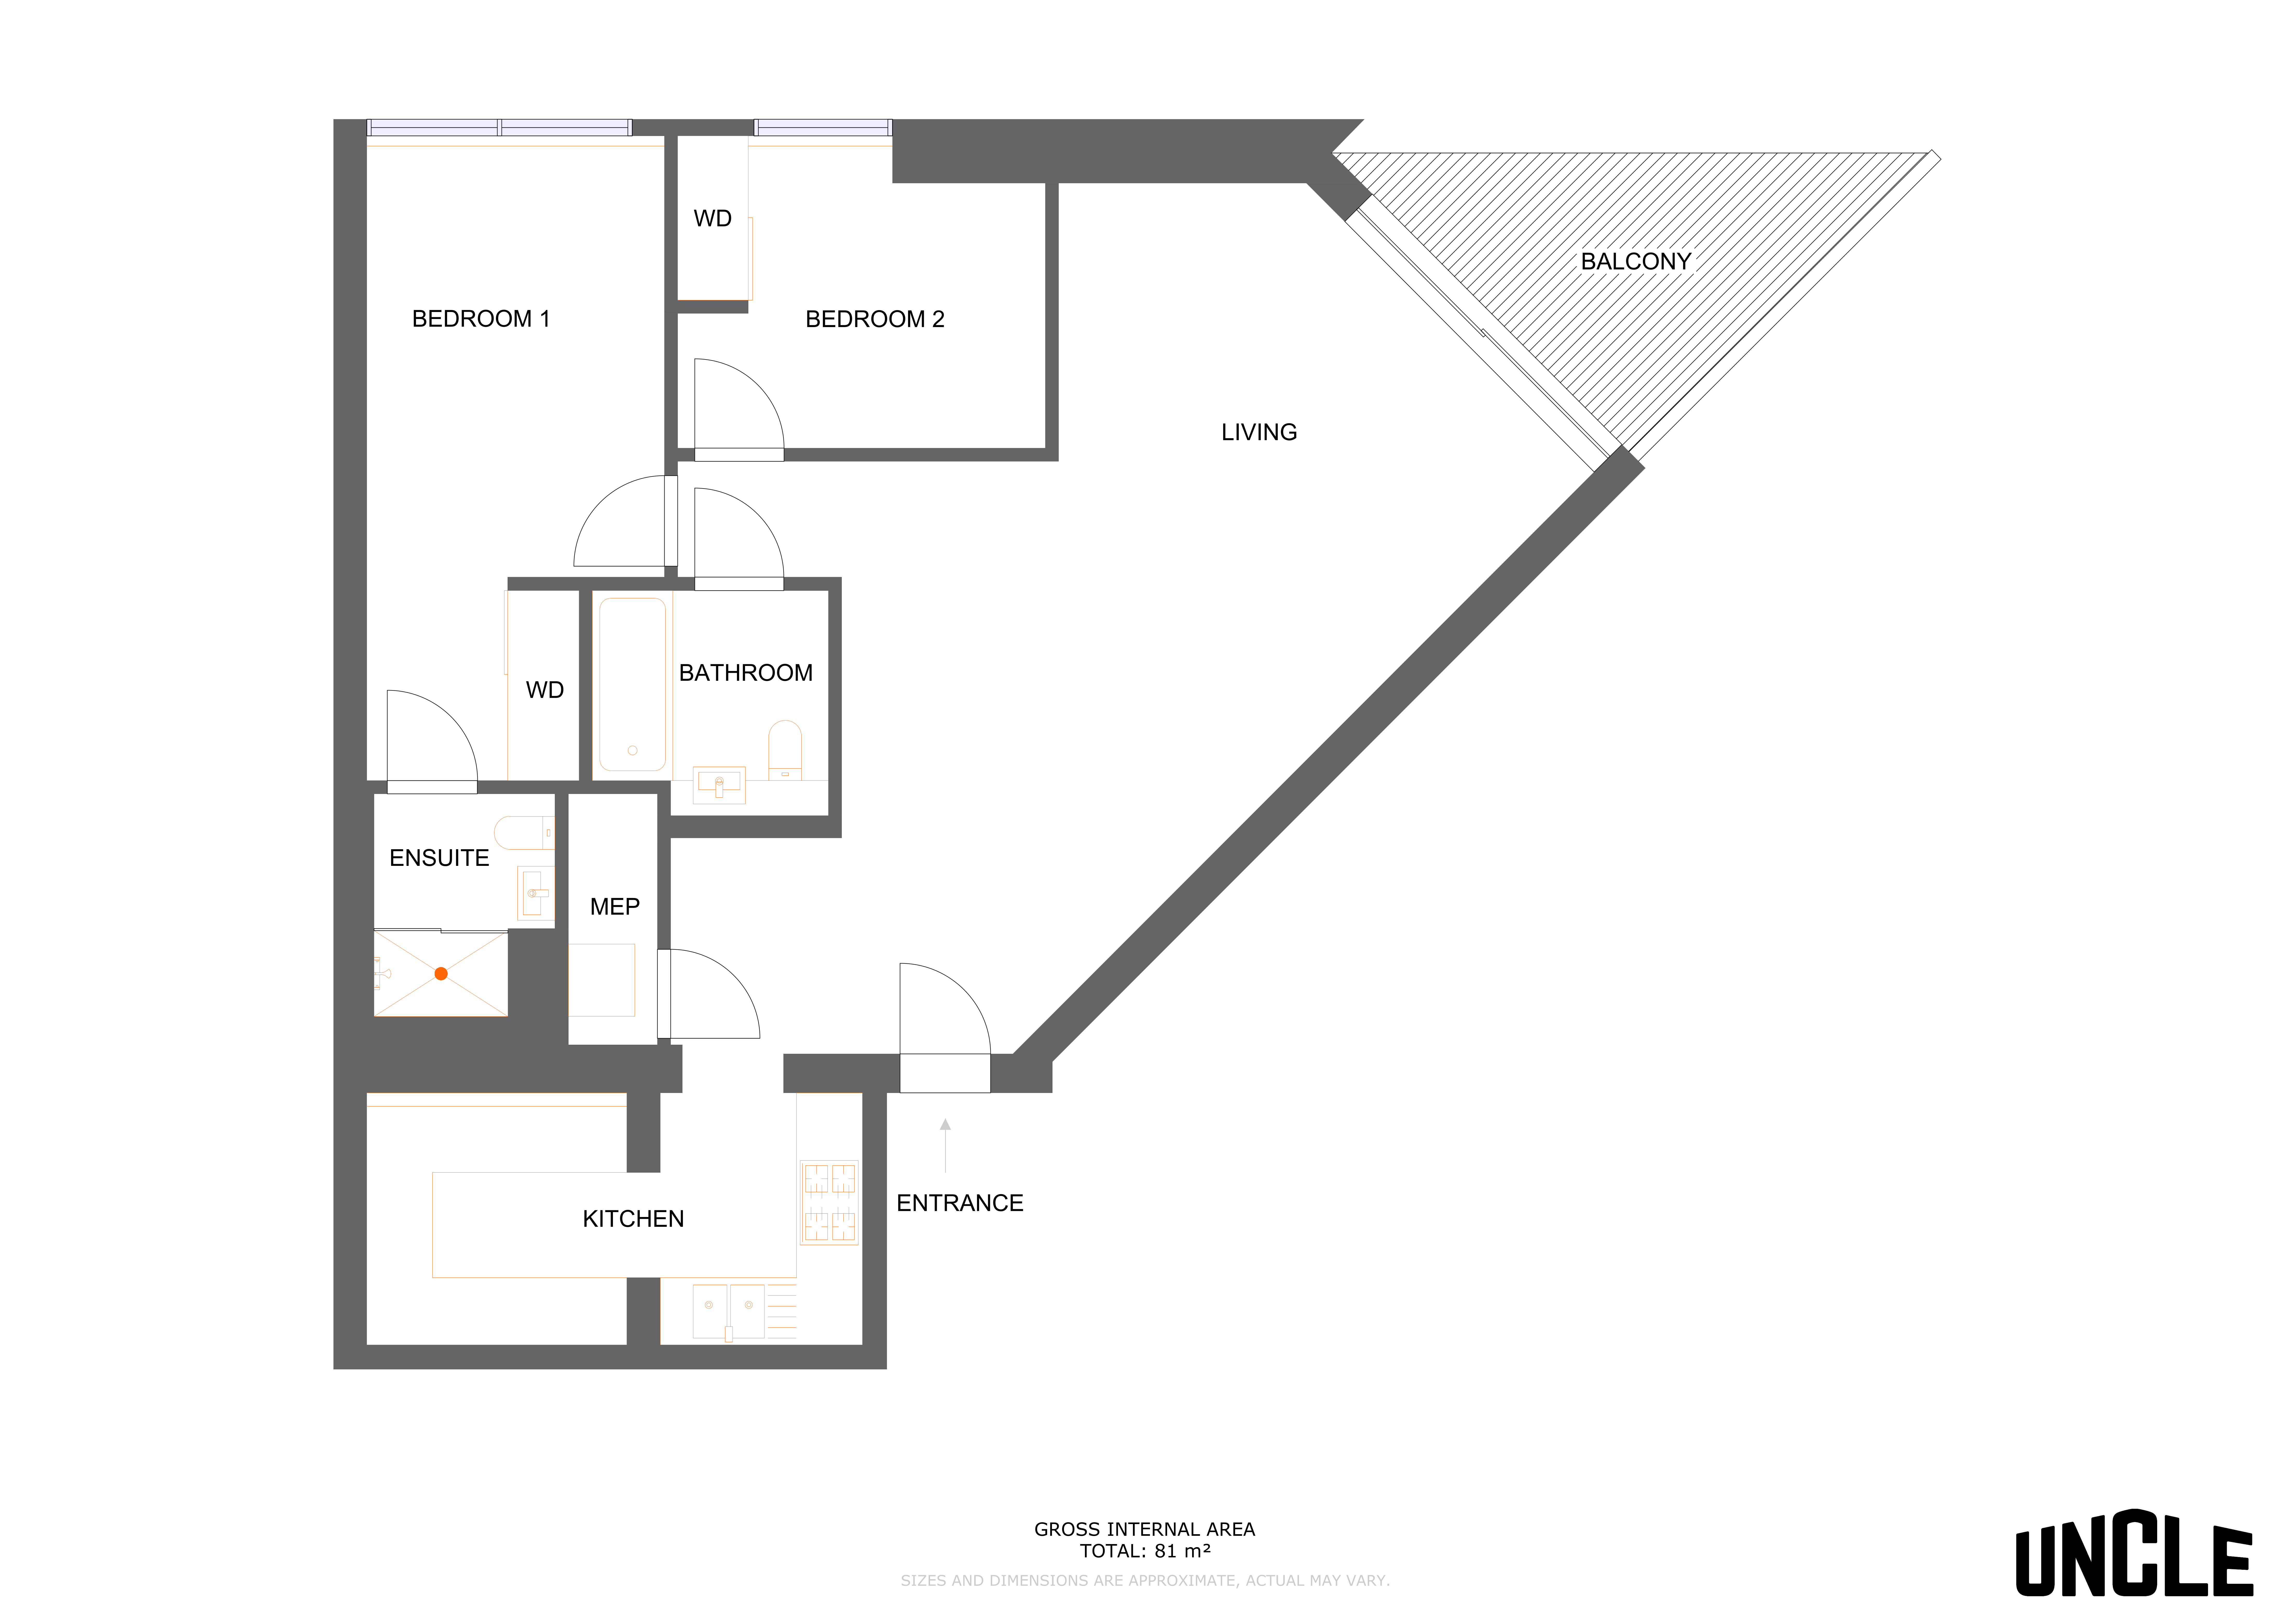 UNCLE Elephant & Castle One Bedroom Floorplan